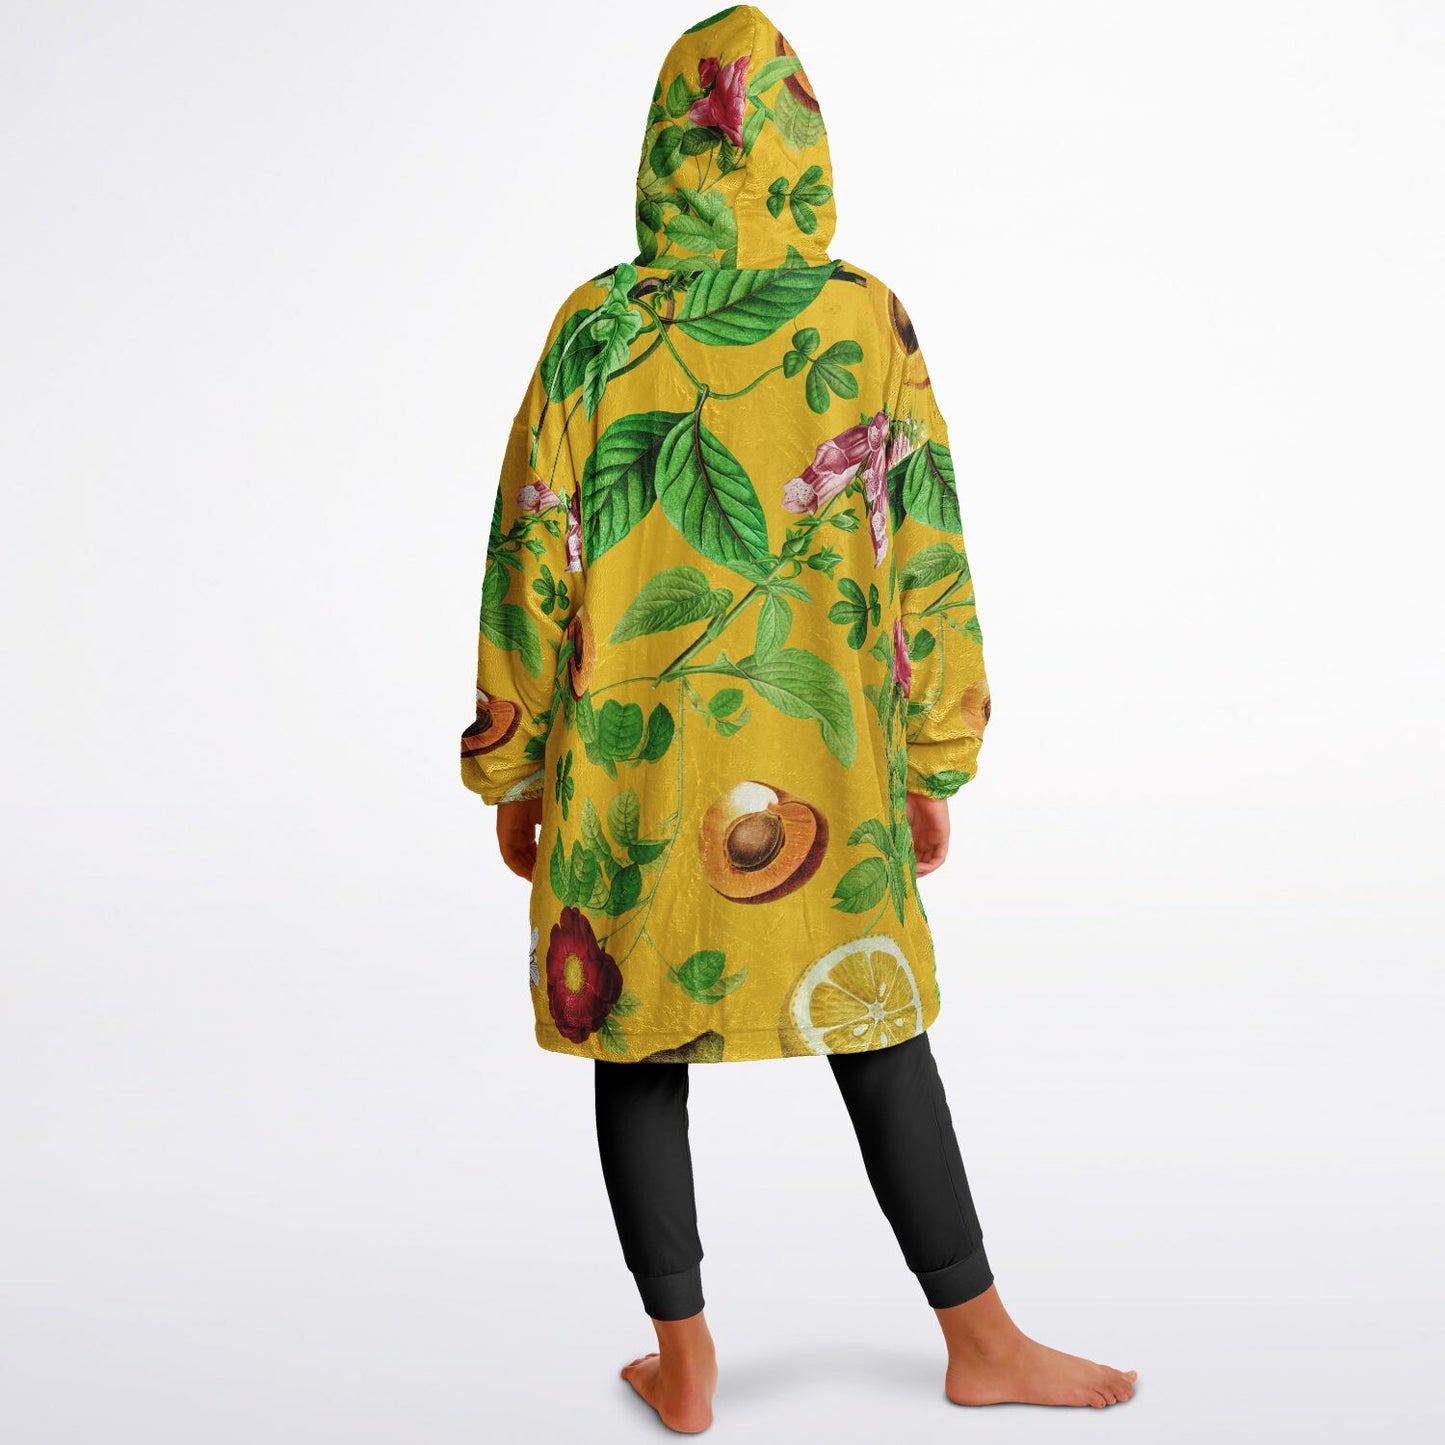 Youth Reversible Snug Hoodie, Drips Paint Design, Fruits Pattern Design